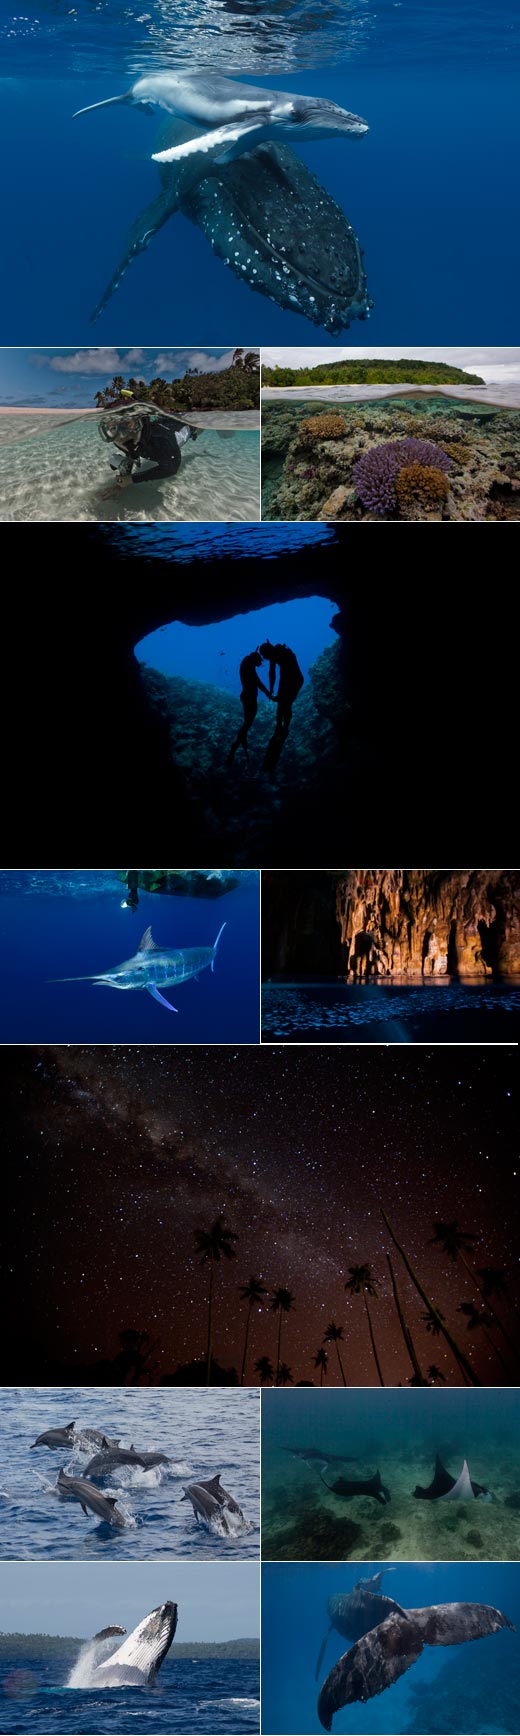 Tonga 2013 whale season collage